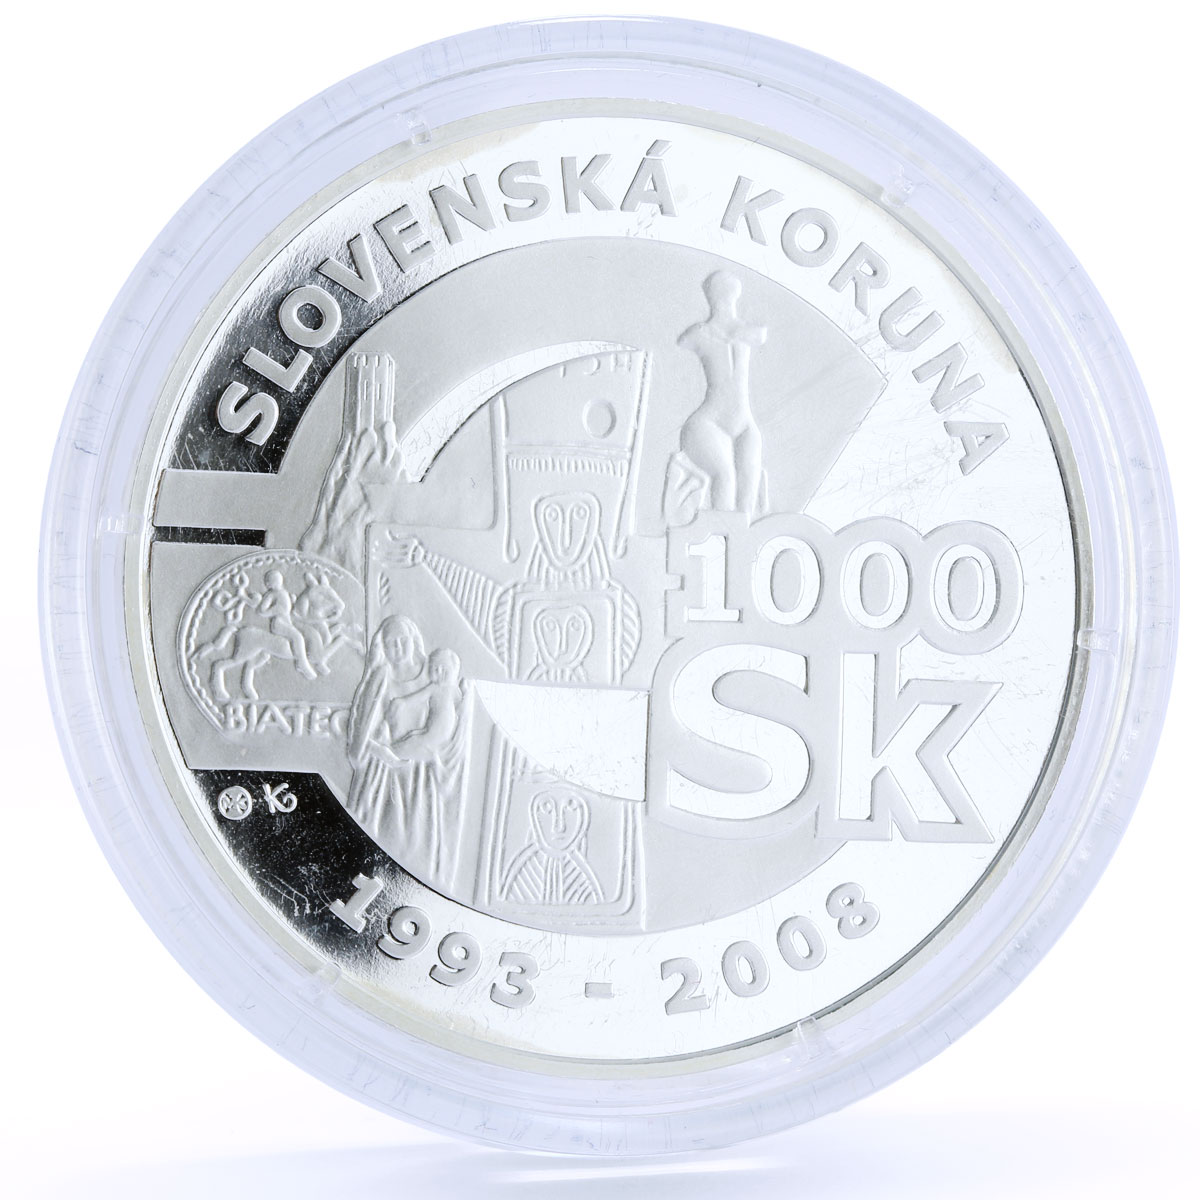 Slovakia 1000 korun National Currency Anniversary Statues Building Ag coin 2008